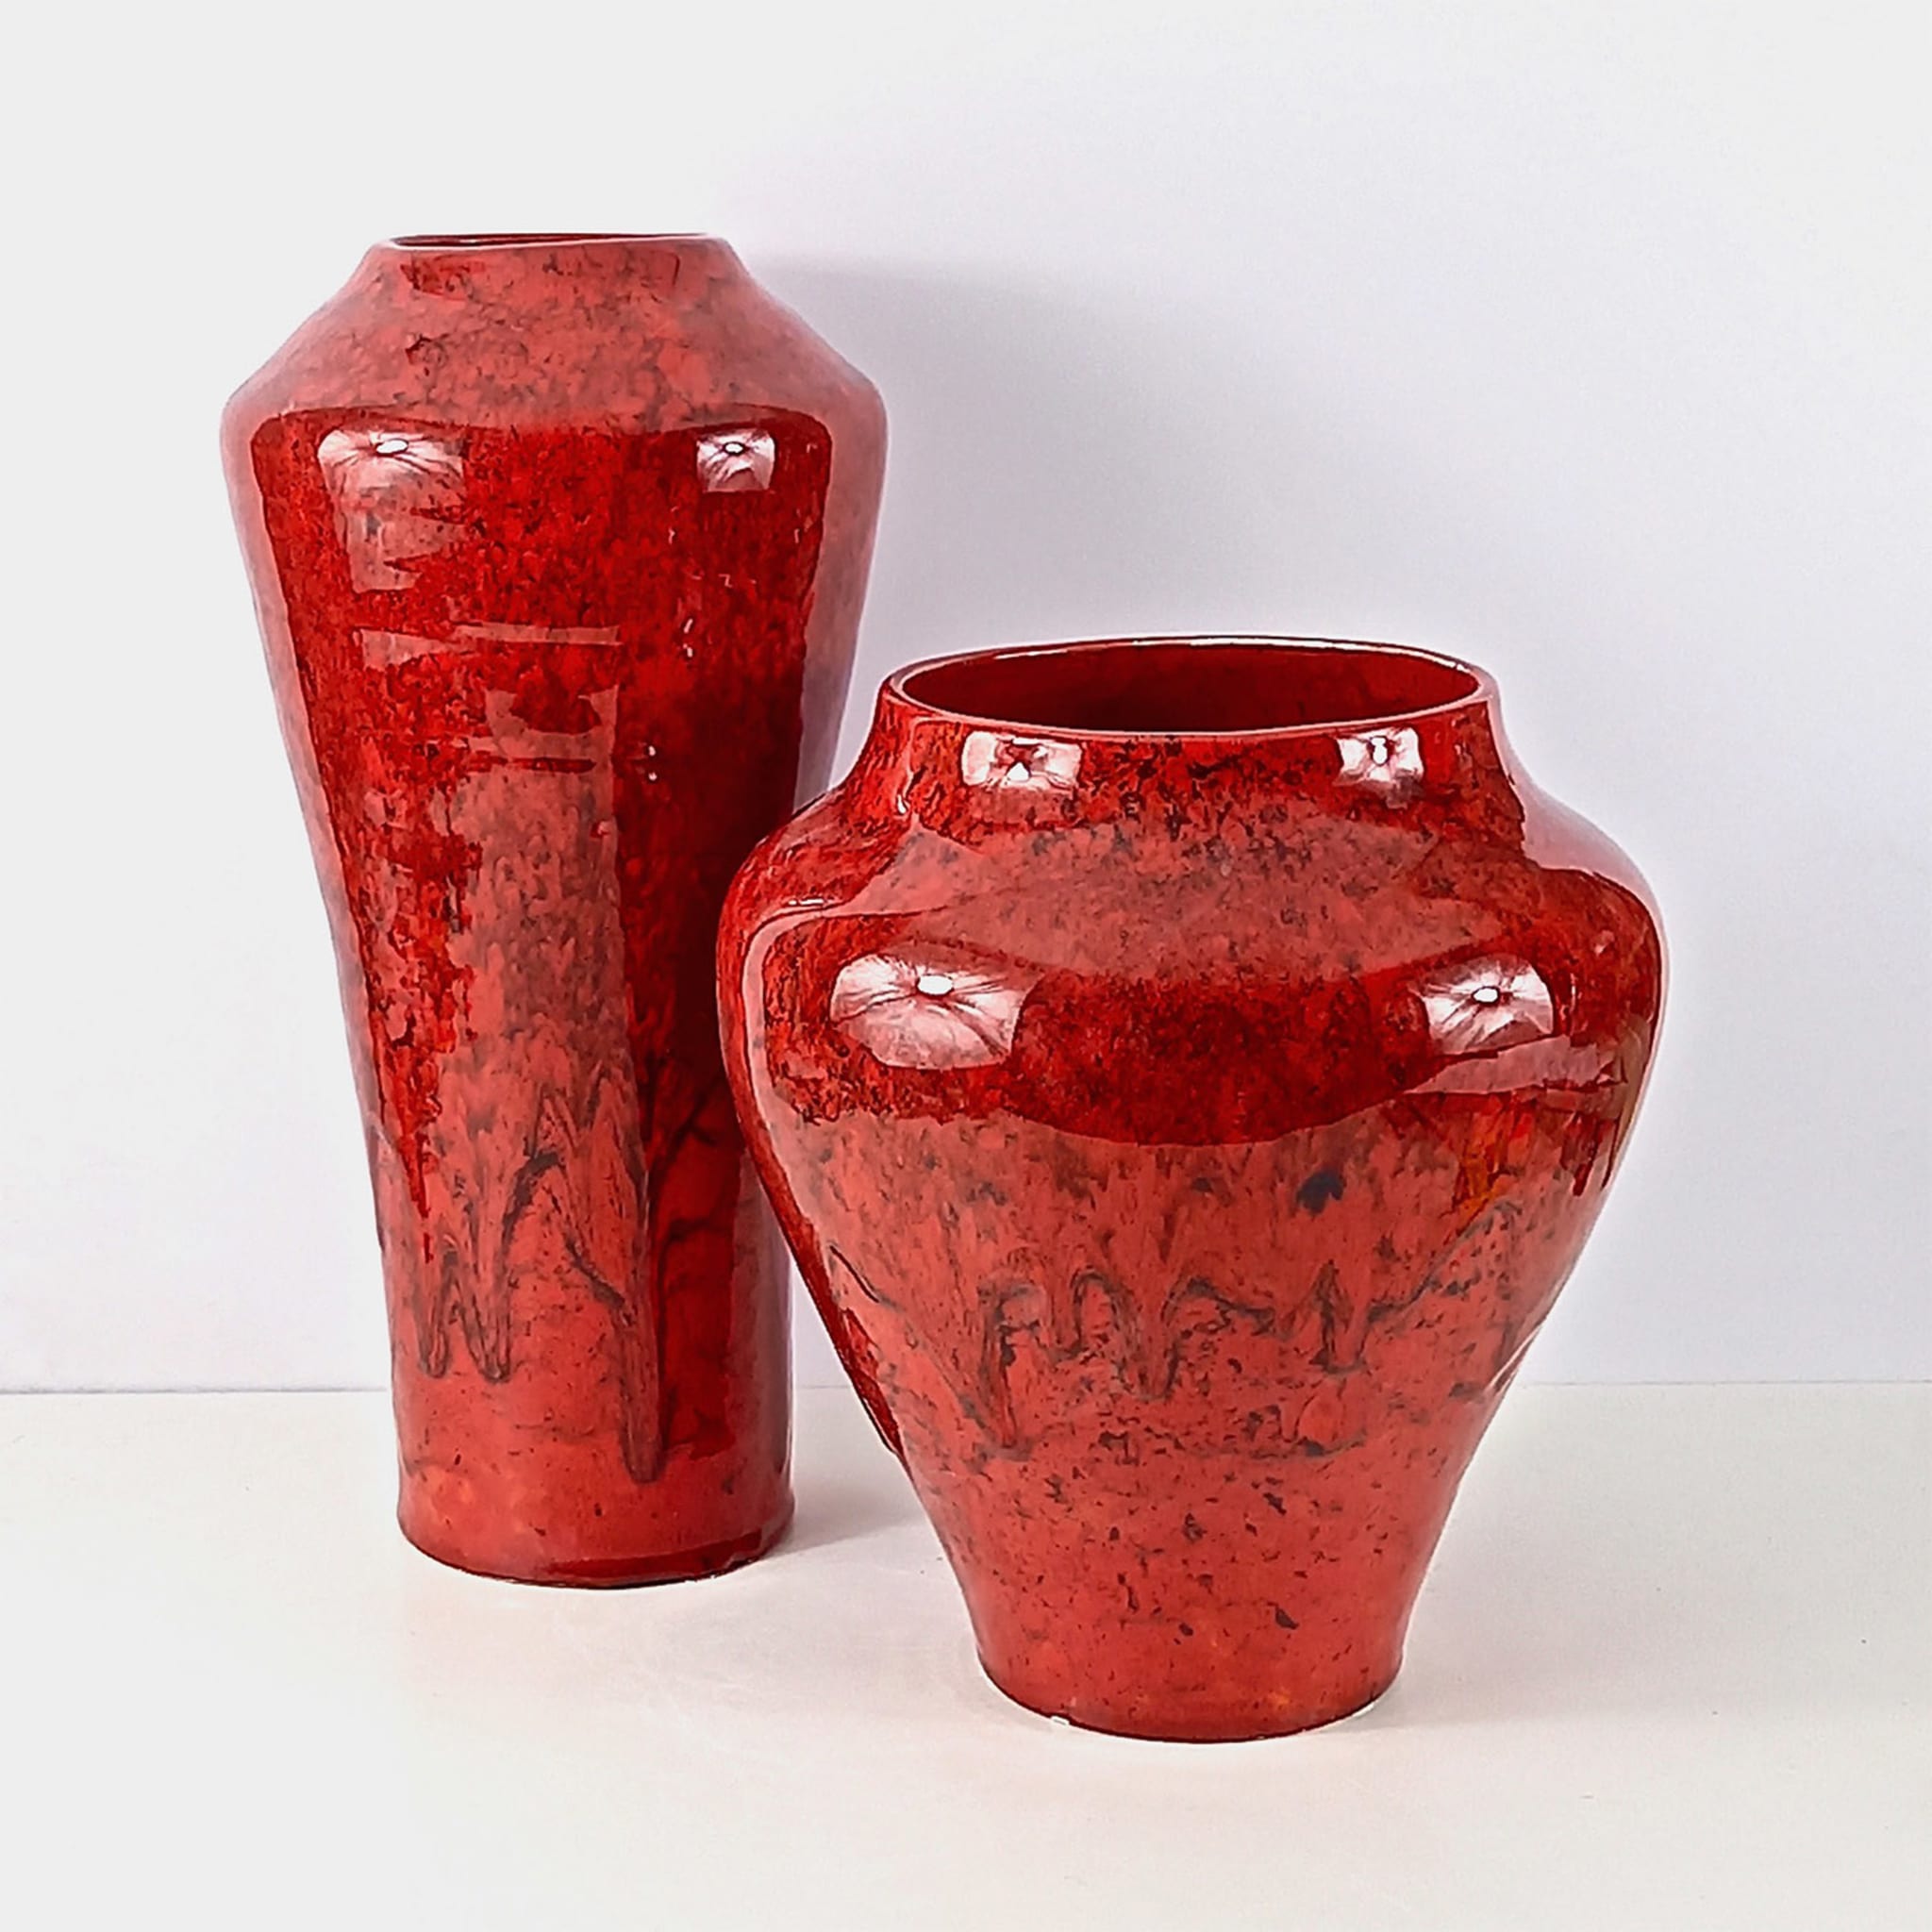 Gran Rosso Ceramic Vase #2  - Alternative view 1